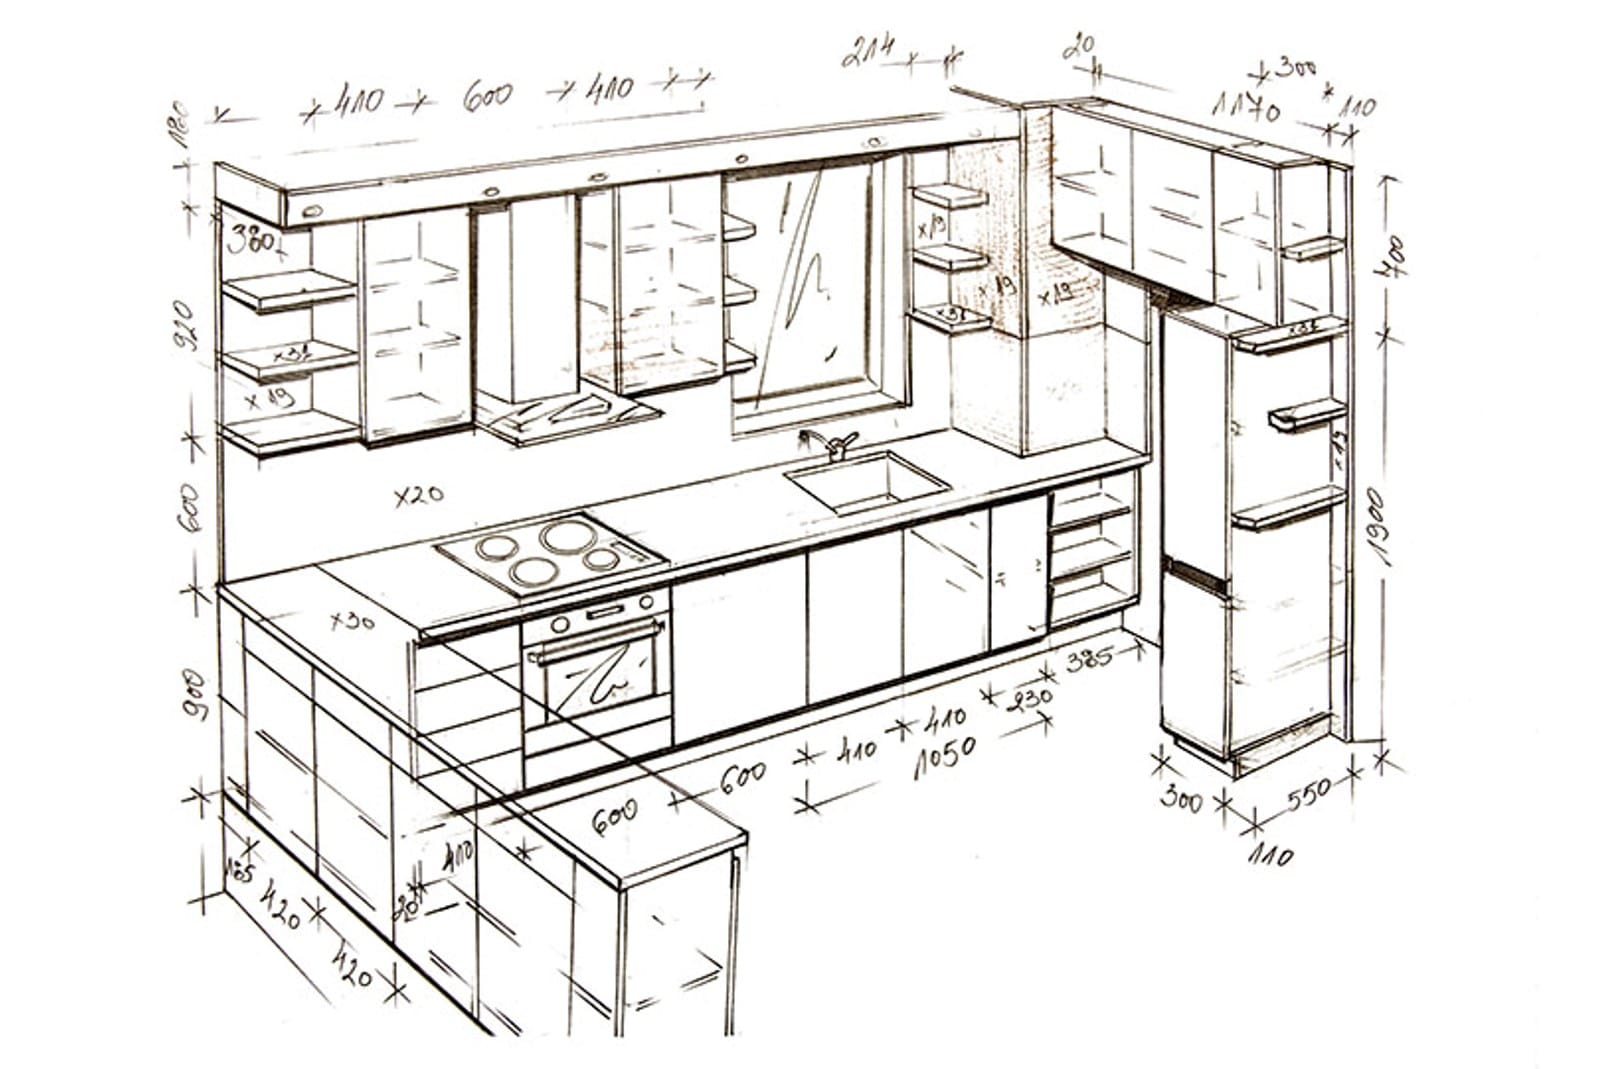 An isometric kitchen plan drawing